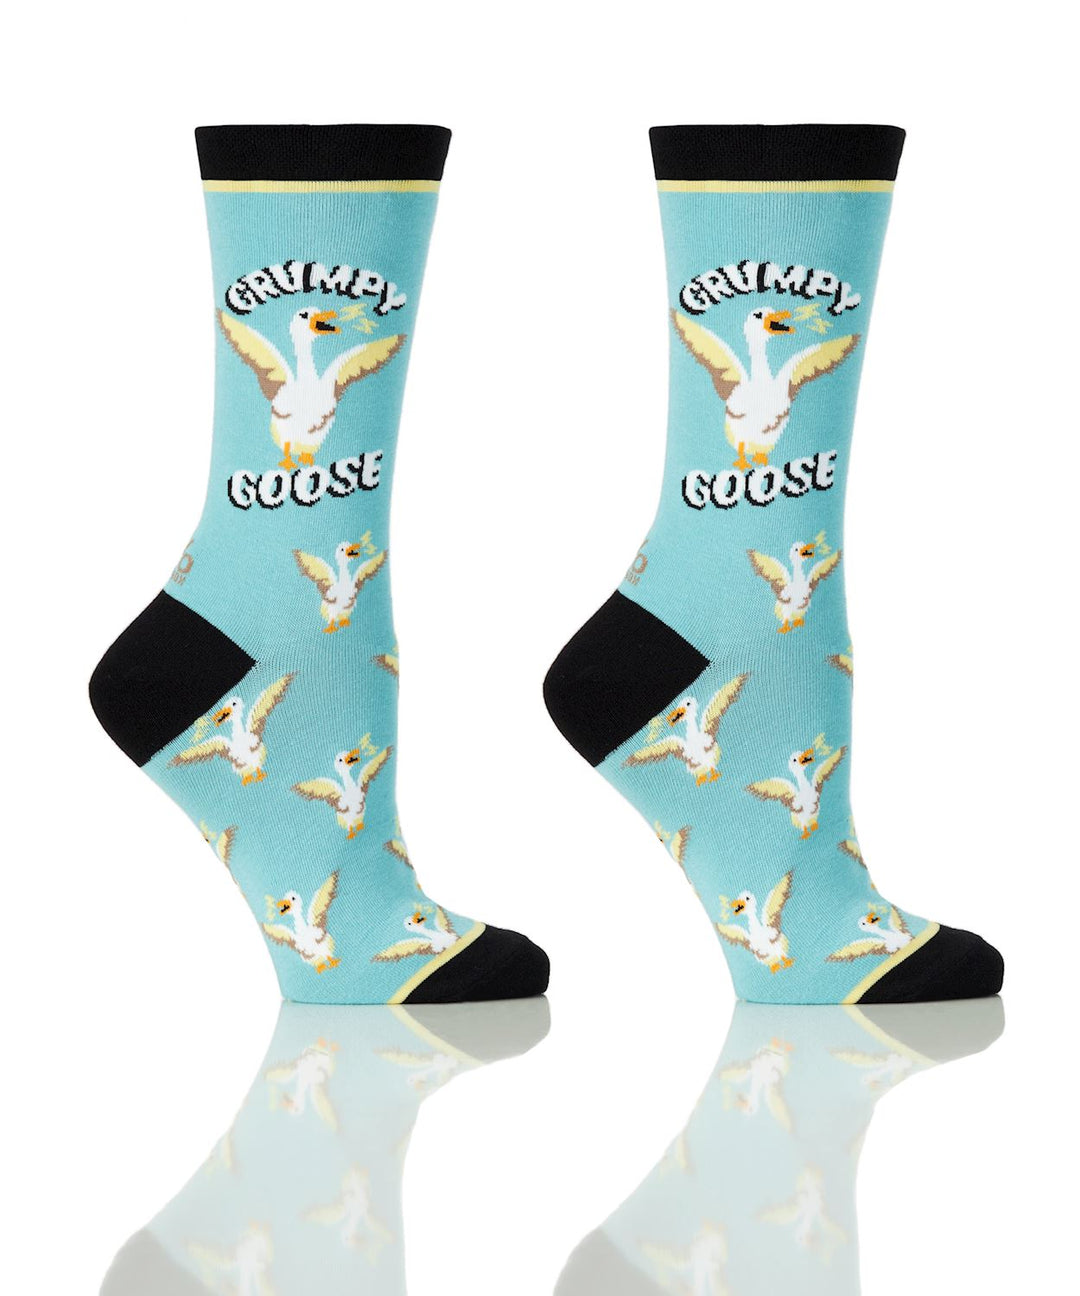 "Grumpy Goose" Cotton Dress Crew Socks by YO Sox - Medium